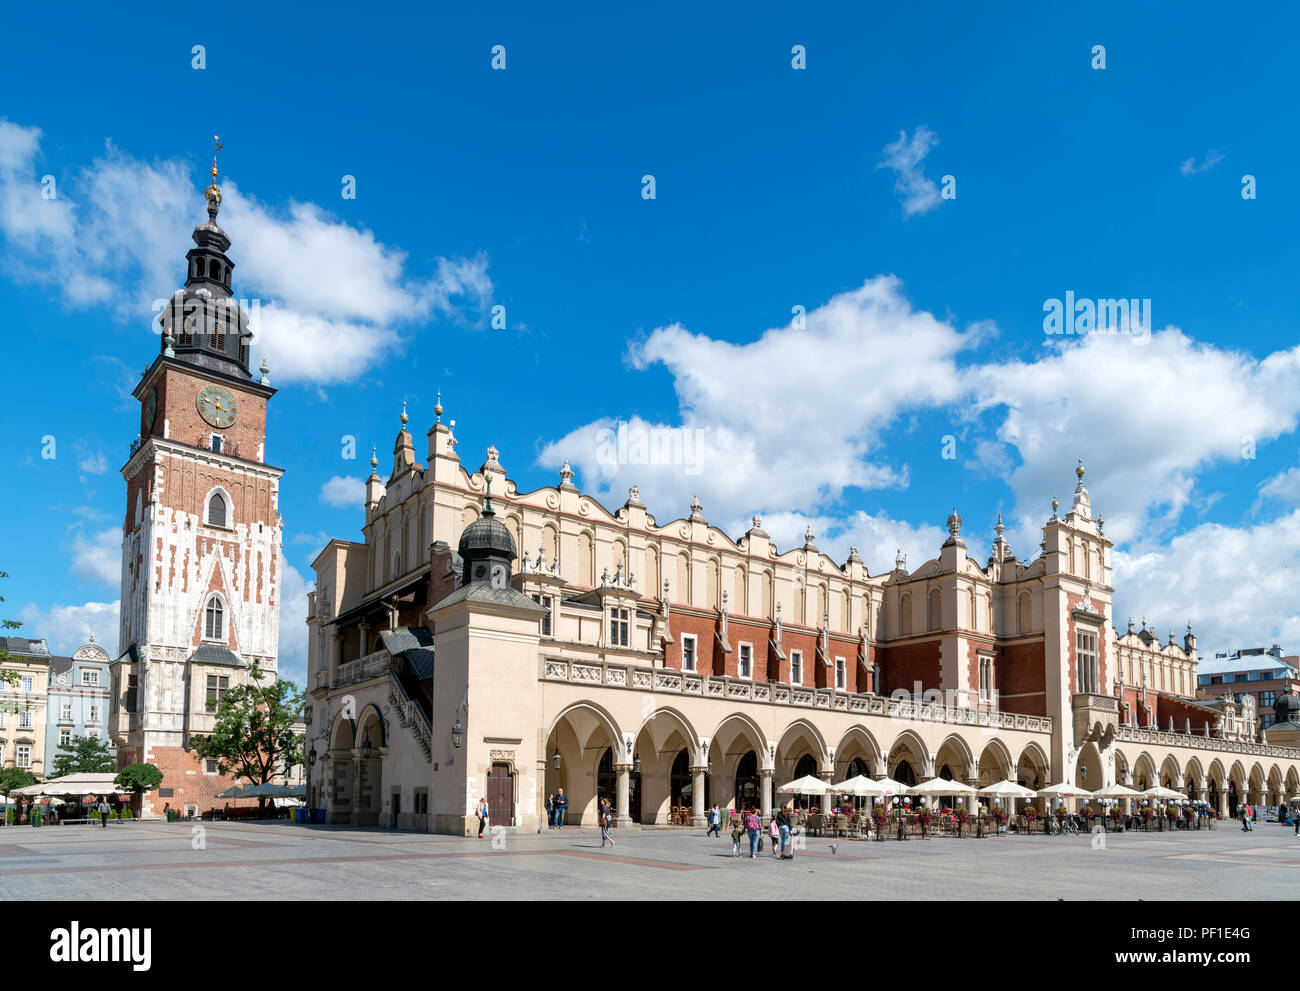 Krakauer Altstadt. Rathaus turm (Wieża ratuszowa) und Tuchhallen (Sukiennice) auf dem Marktplatz (Rynek Główny), Kraków, Polen Stockfoto